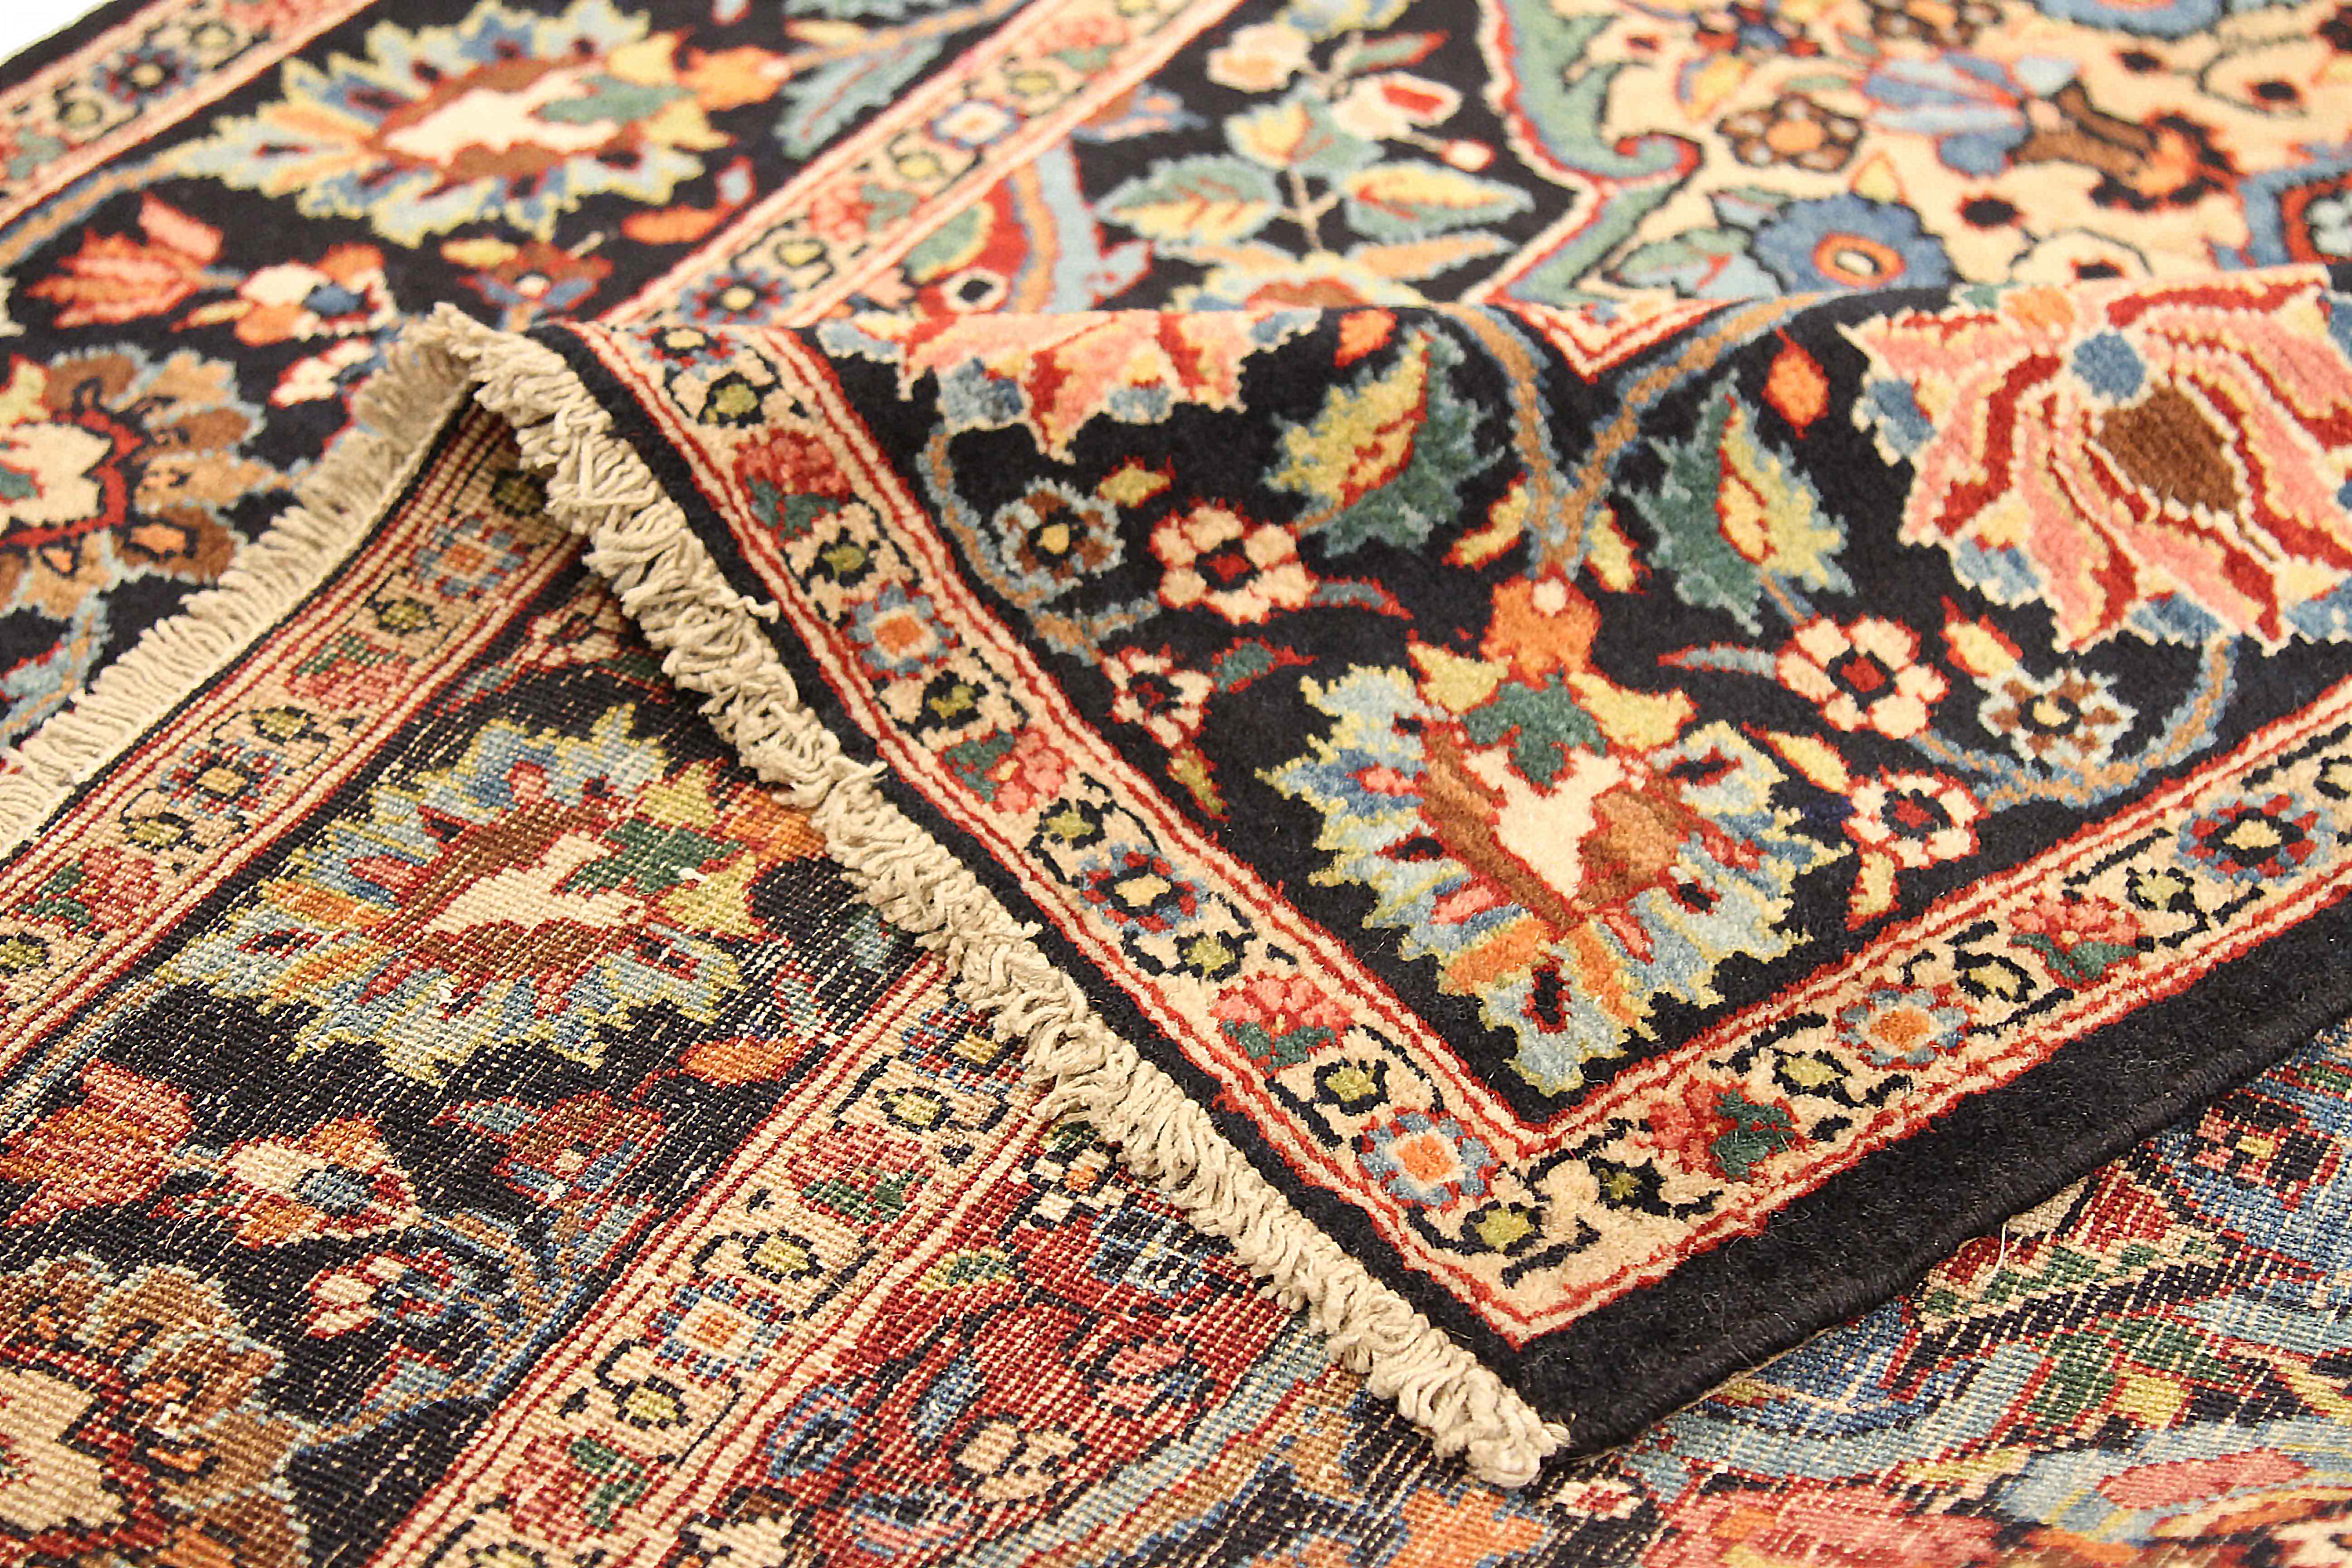 Hand-Woven Antique Persian Area Rug Kermanshah Design For Sale